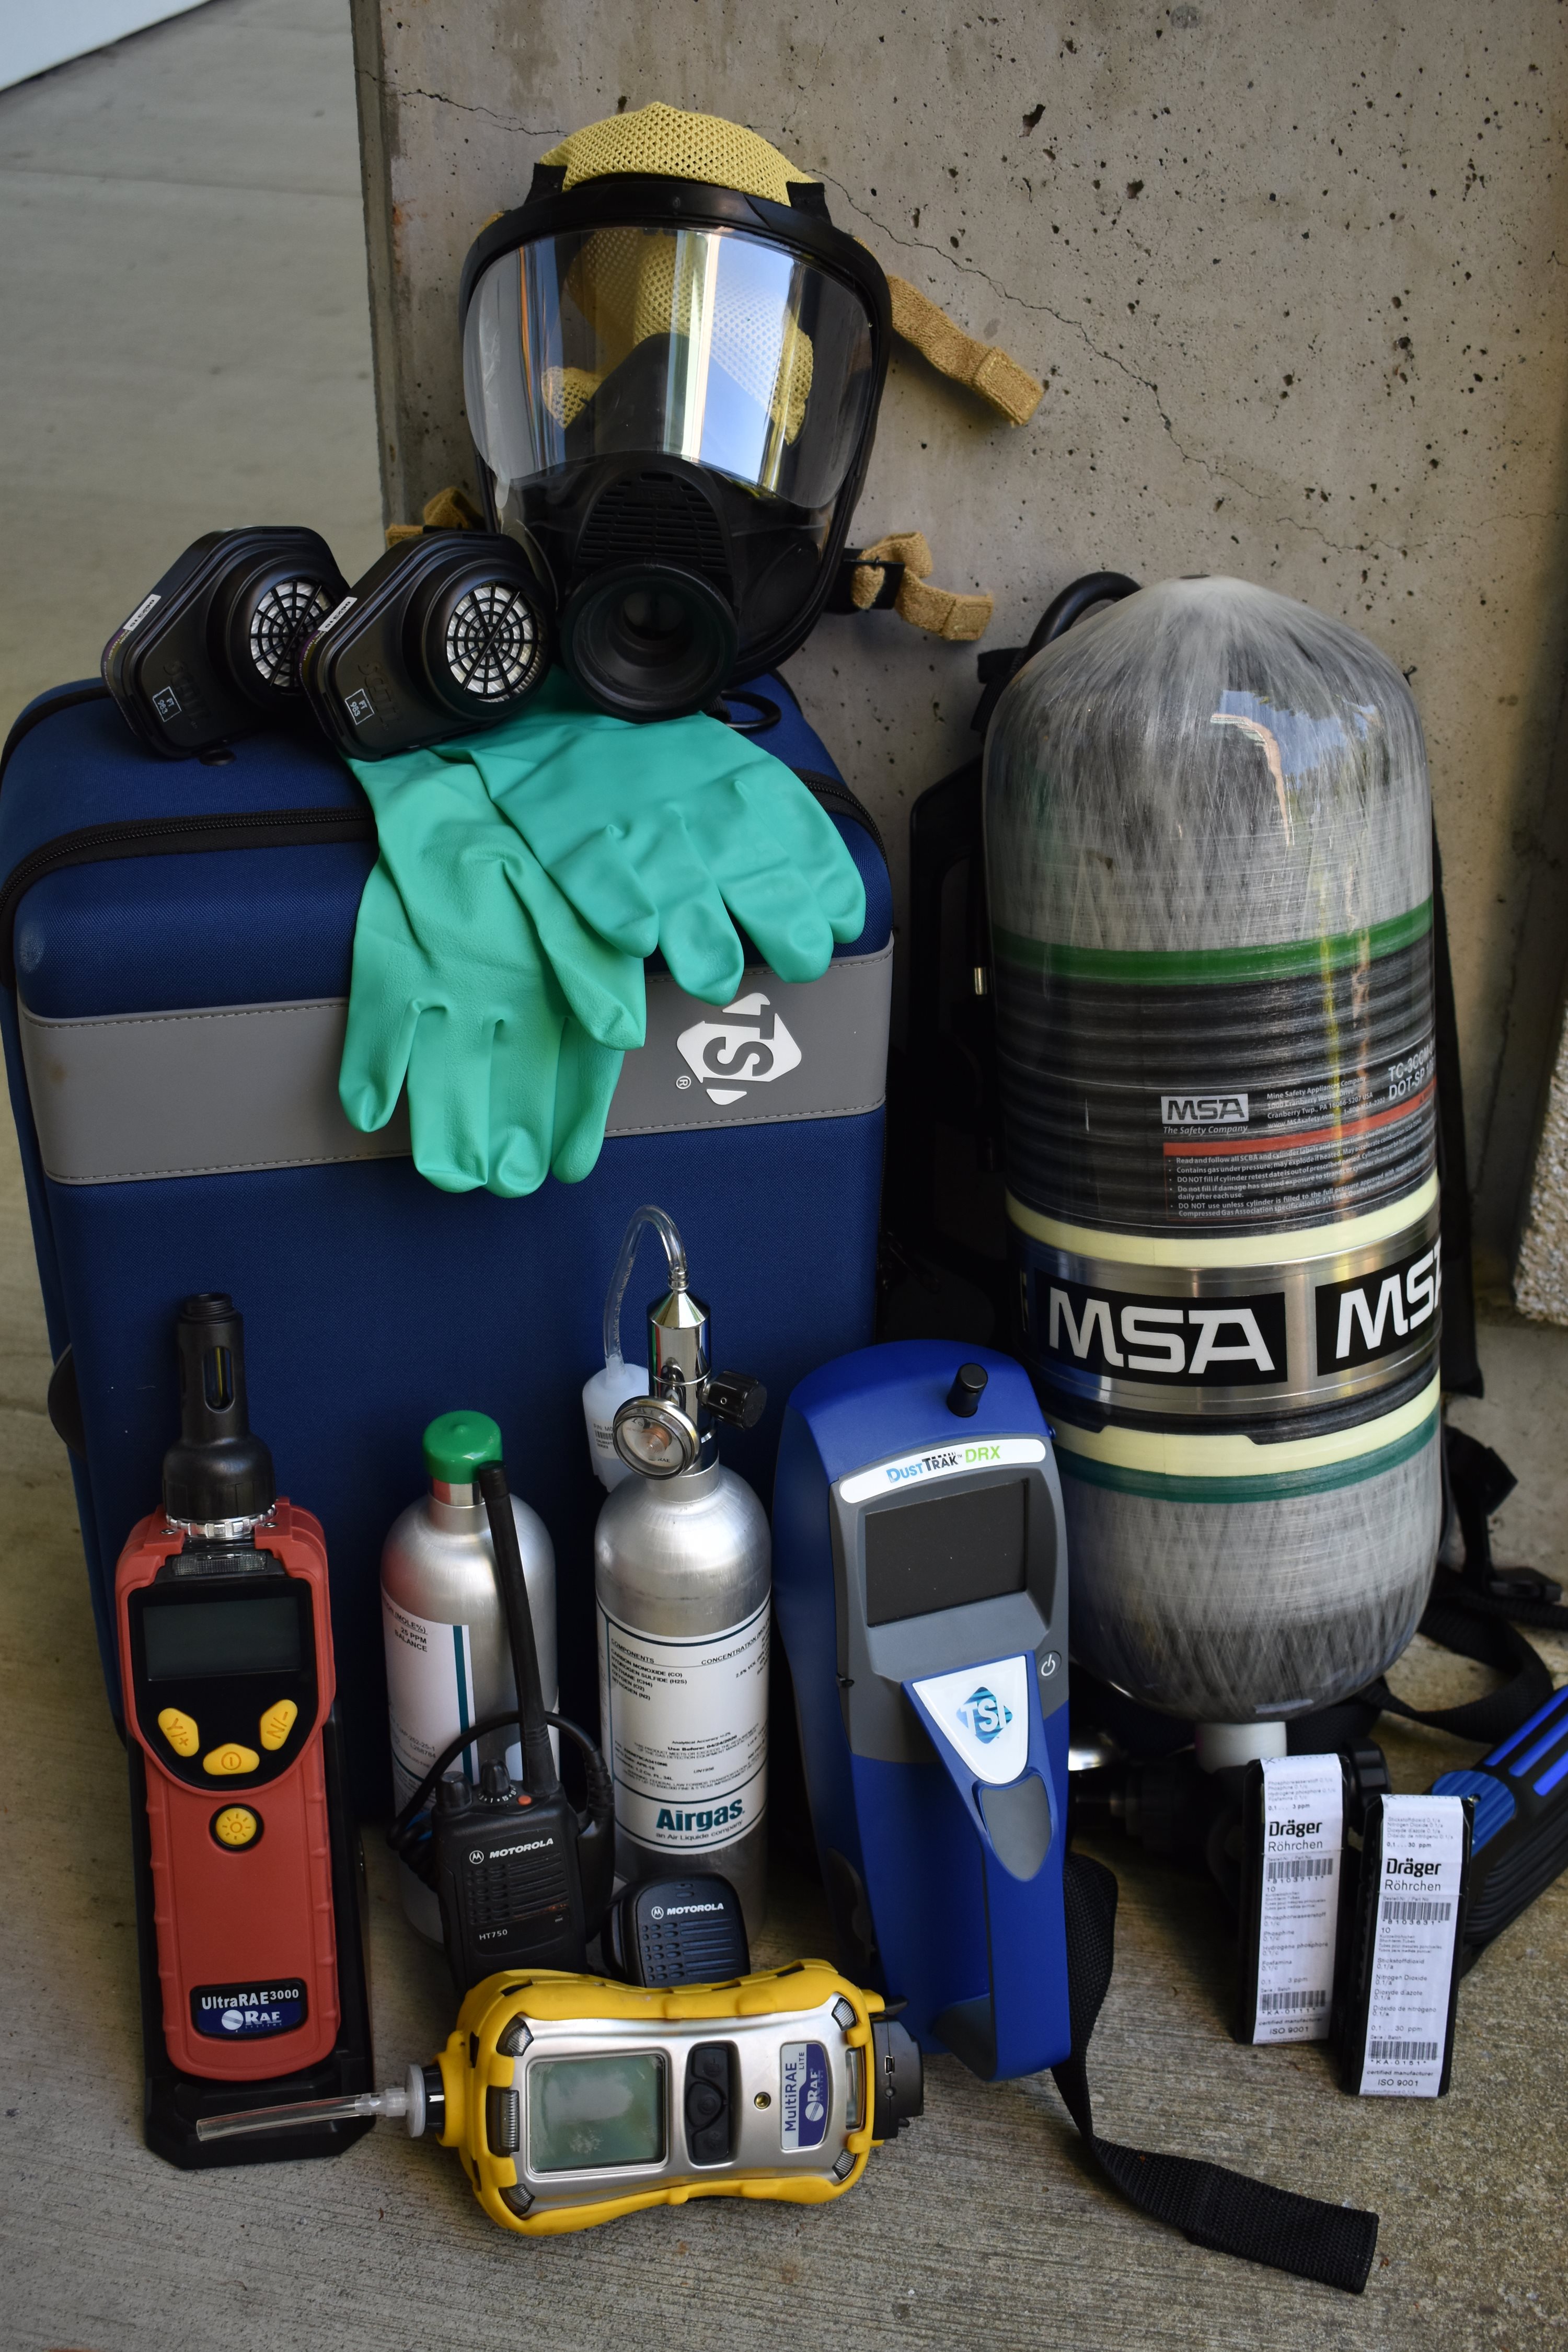 Equipment used for emergency responses